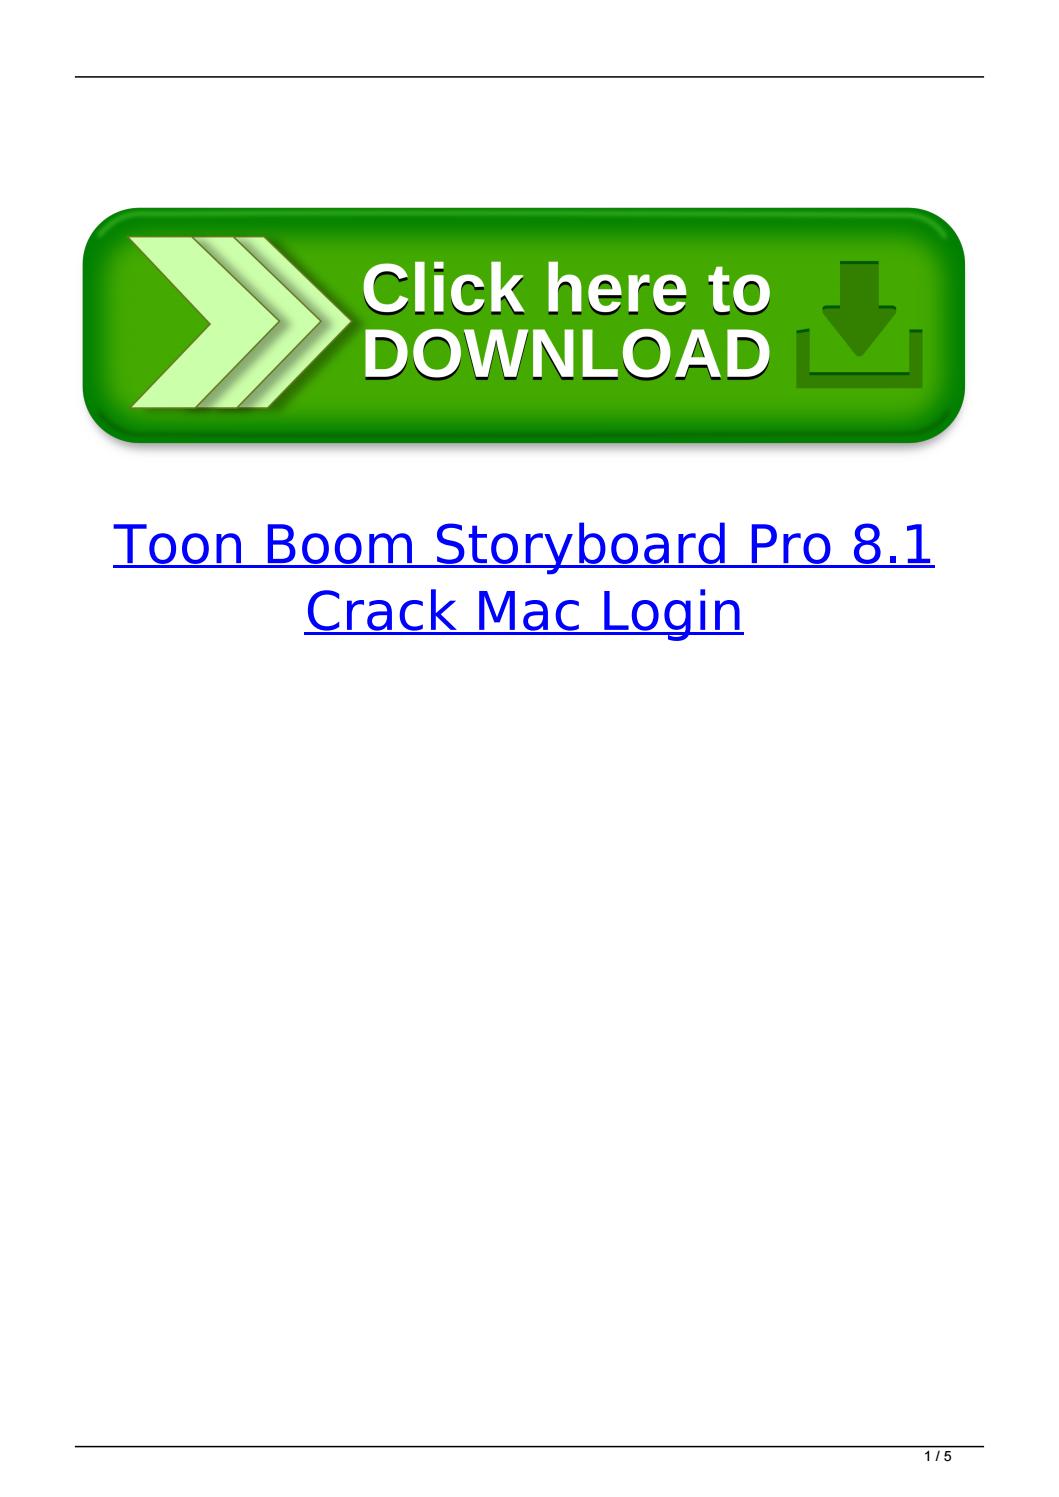 toon boom storyboard pro price